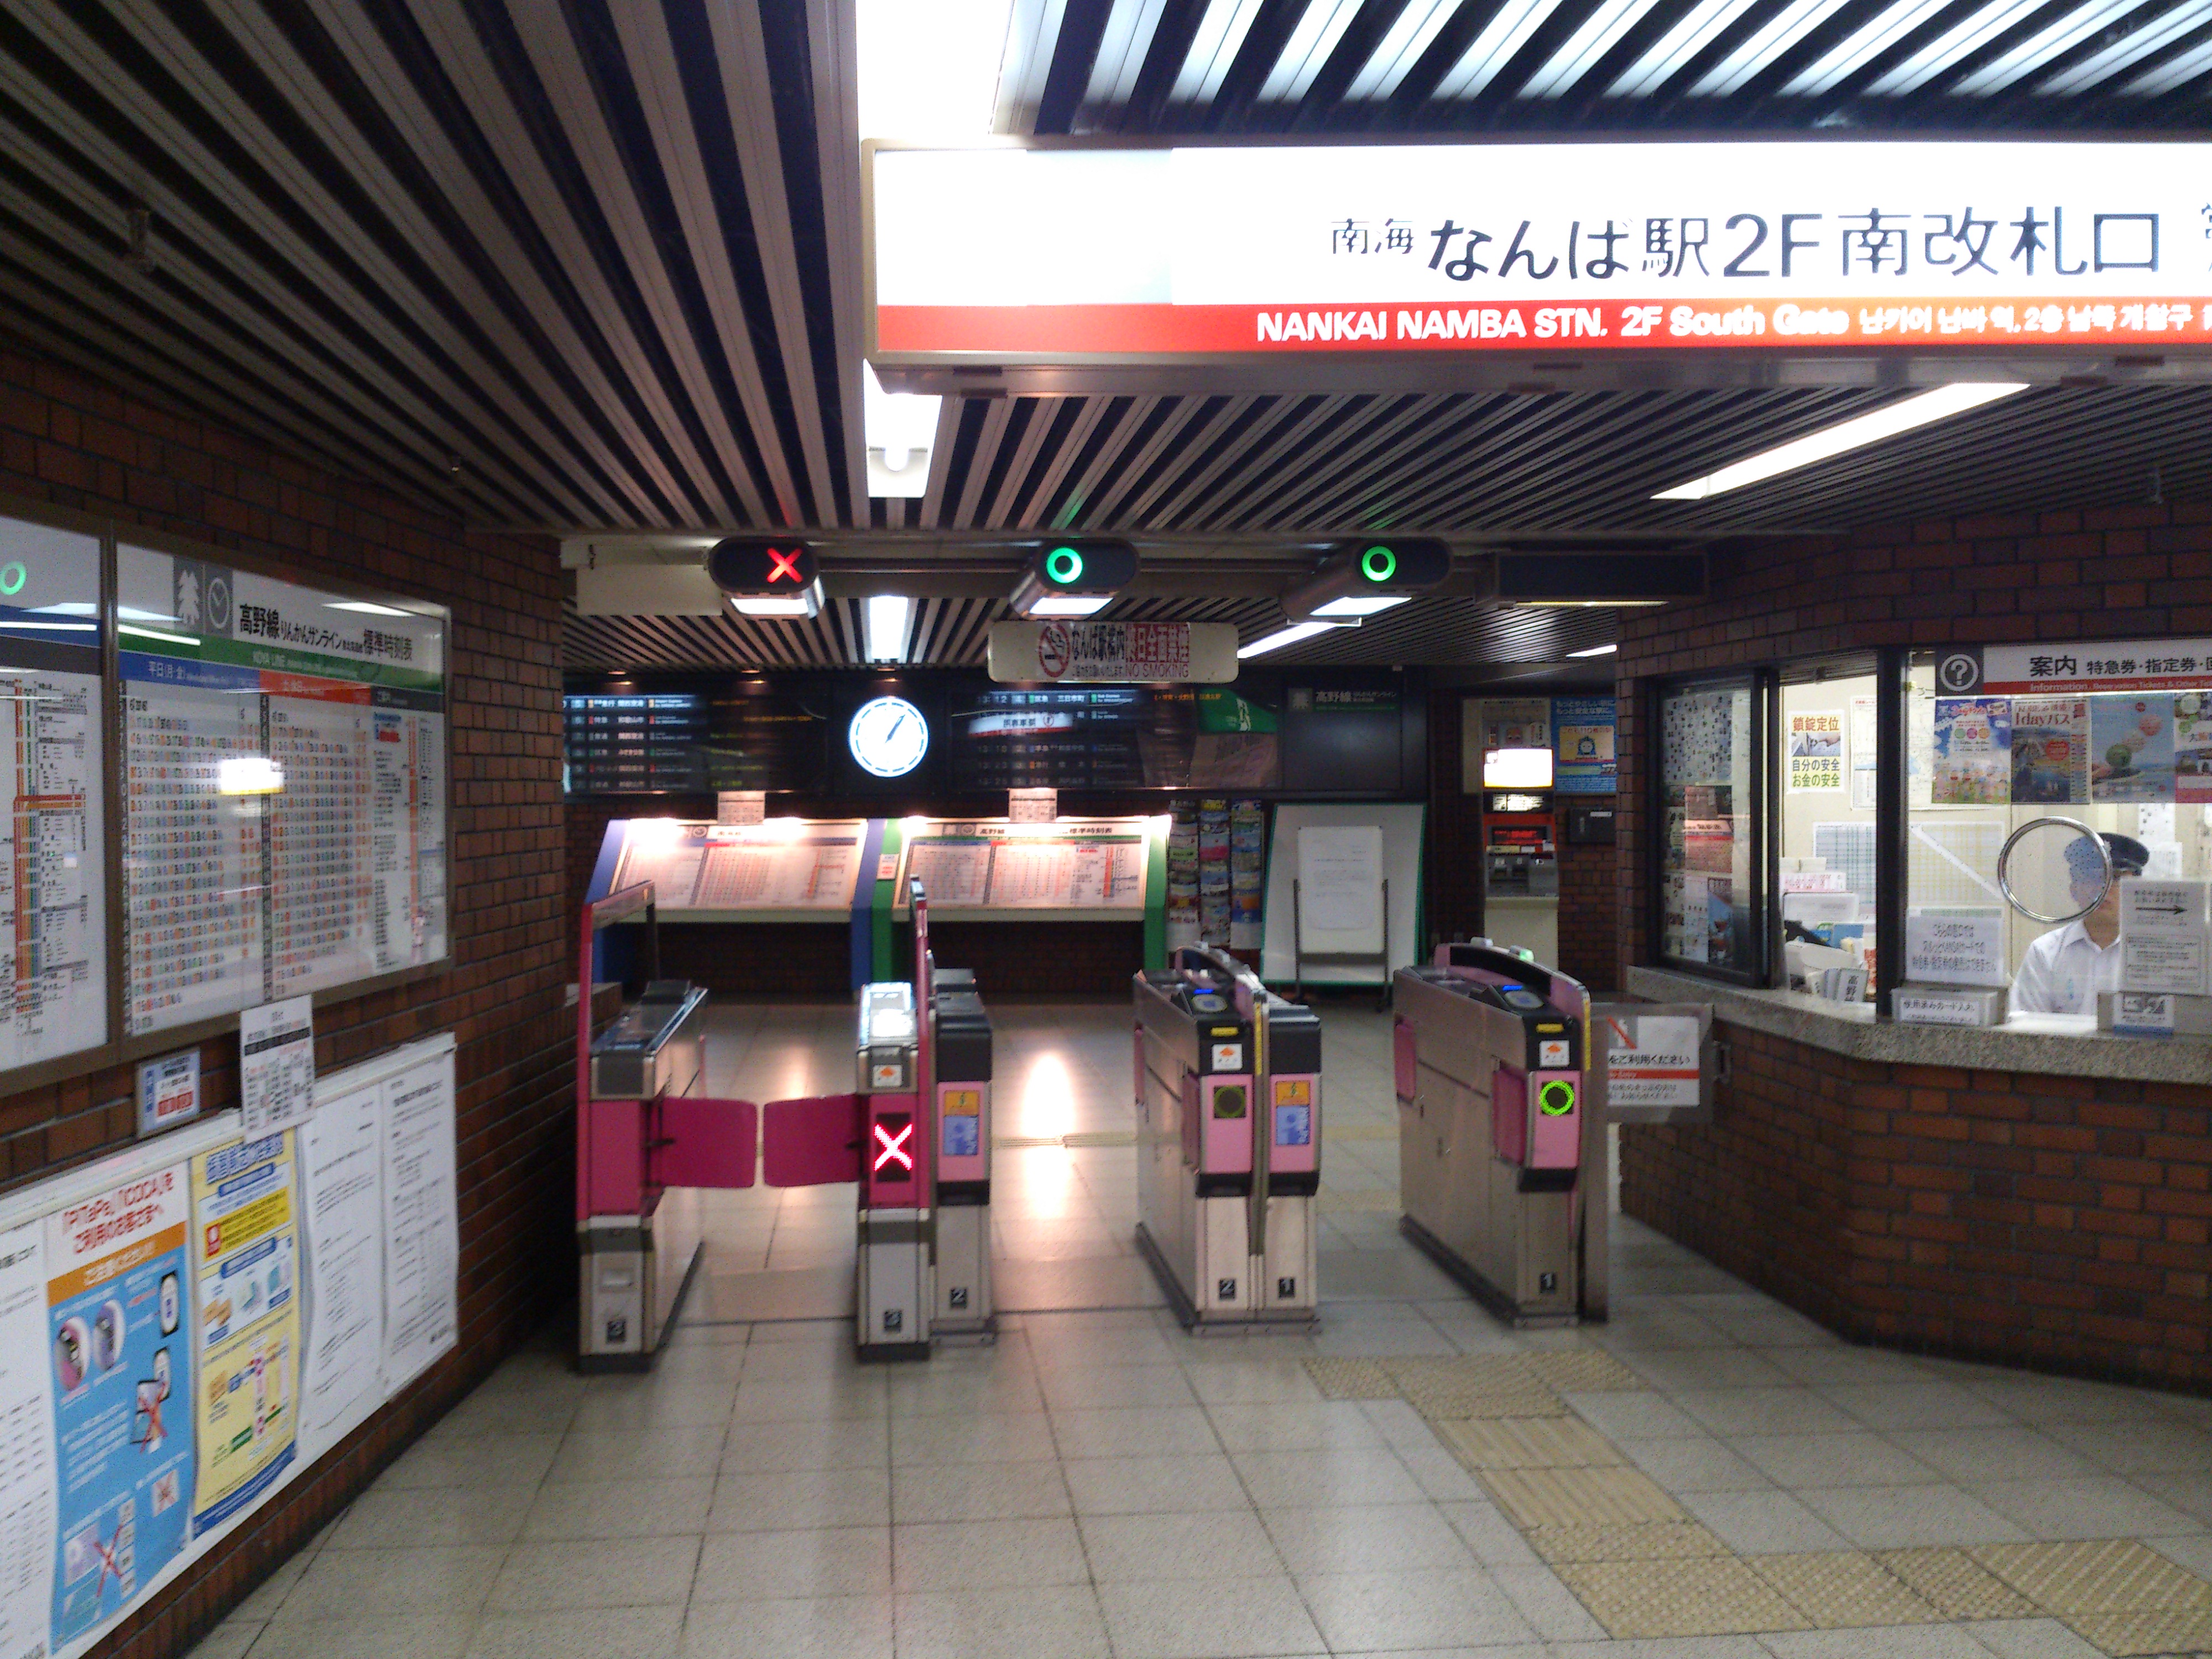  Nankai Namba Station  South gate 01 jpg Wikipedia